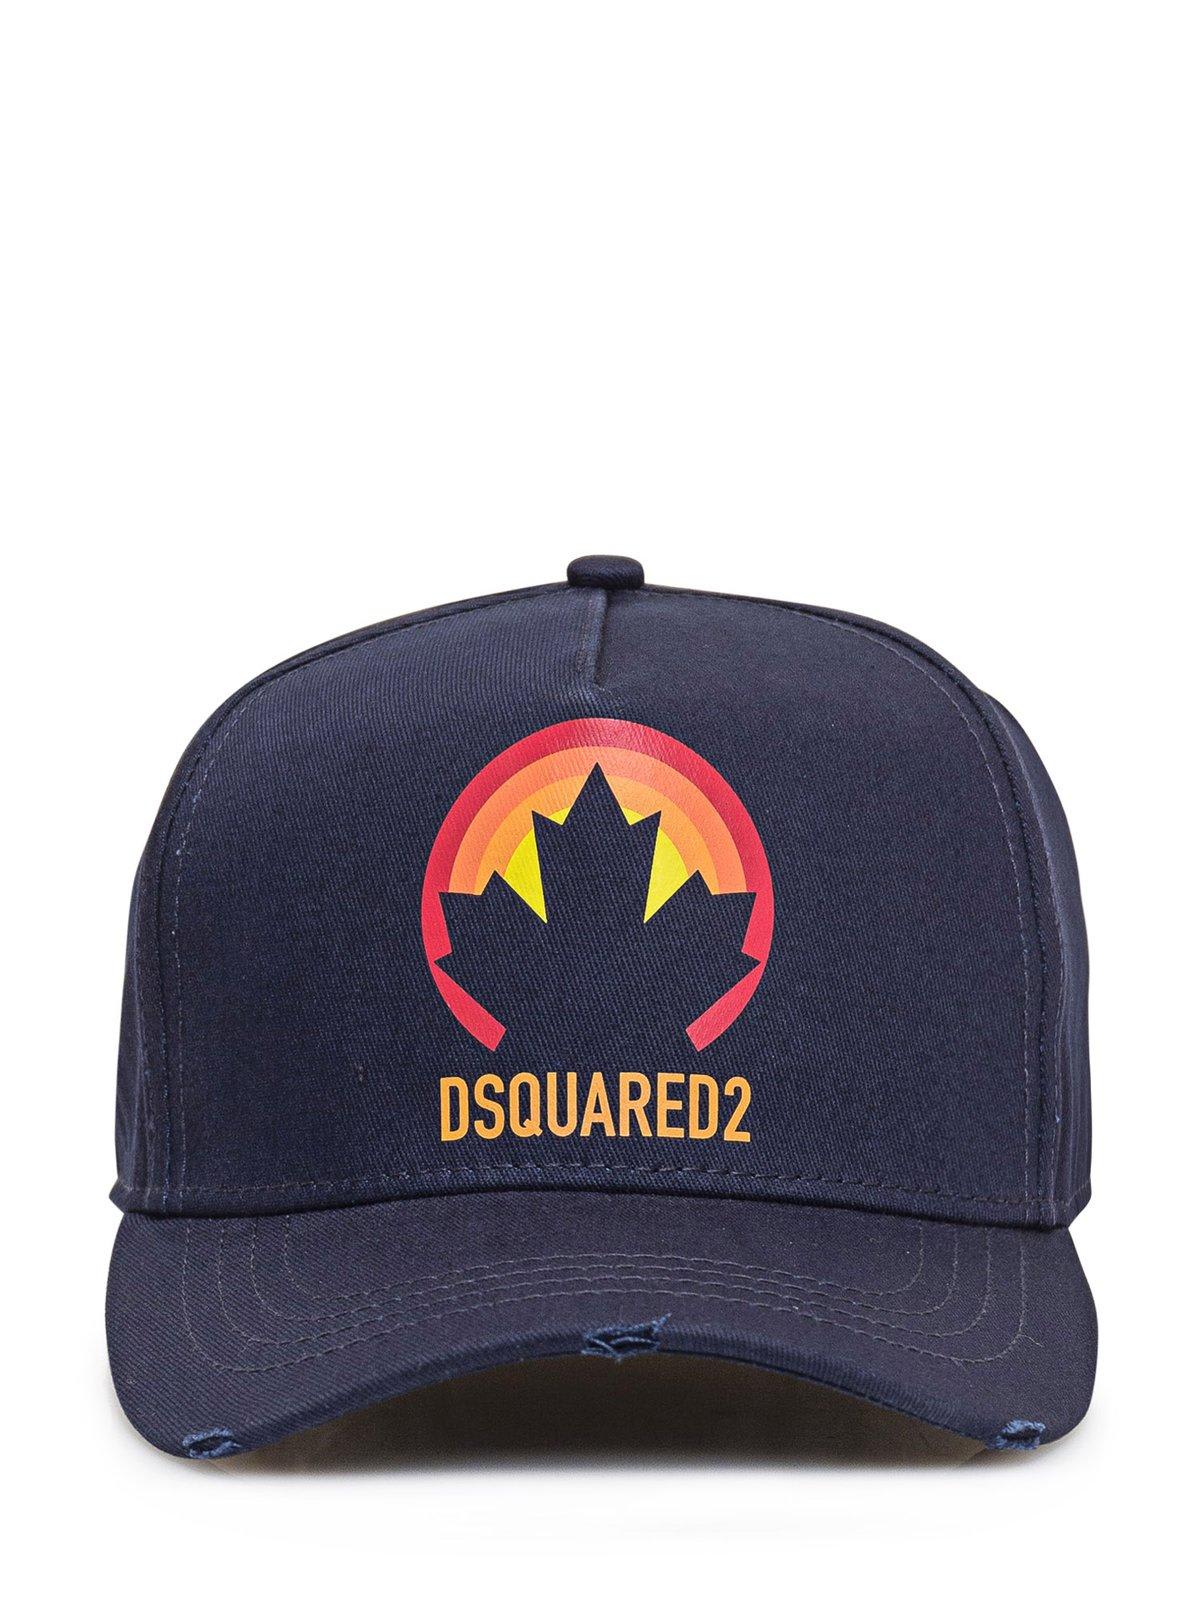 Dsquared2 Logo Printed Curved Peak Baseball Cap